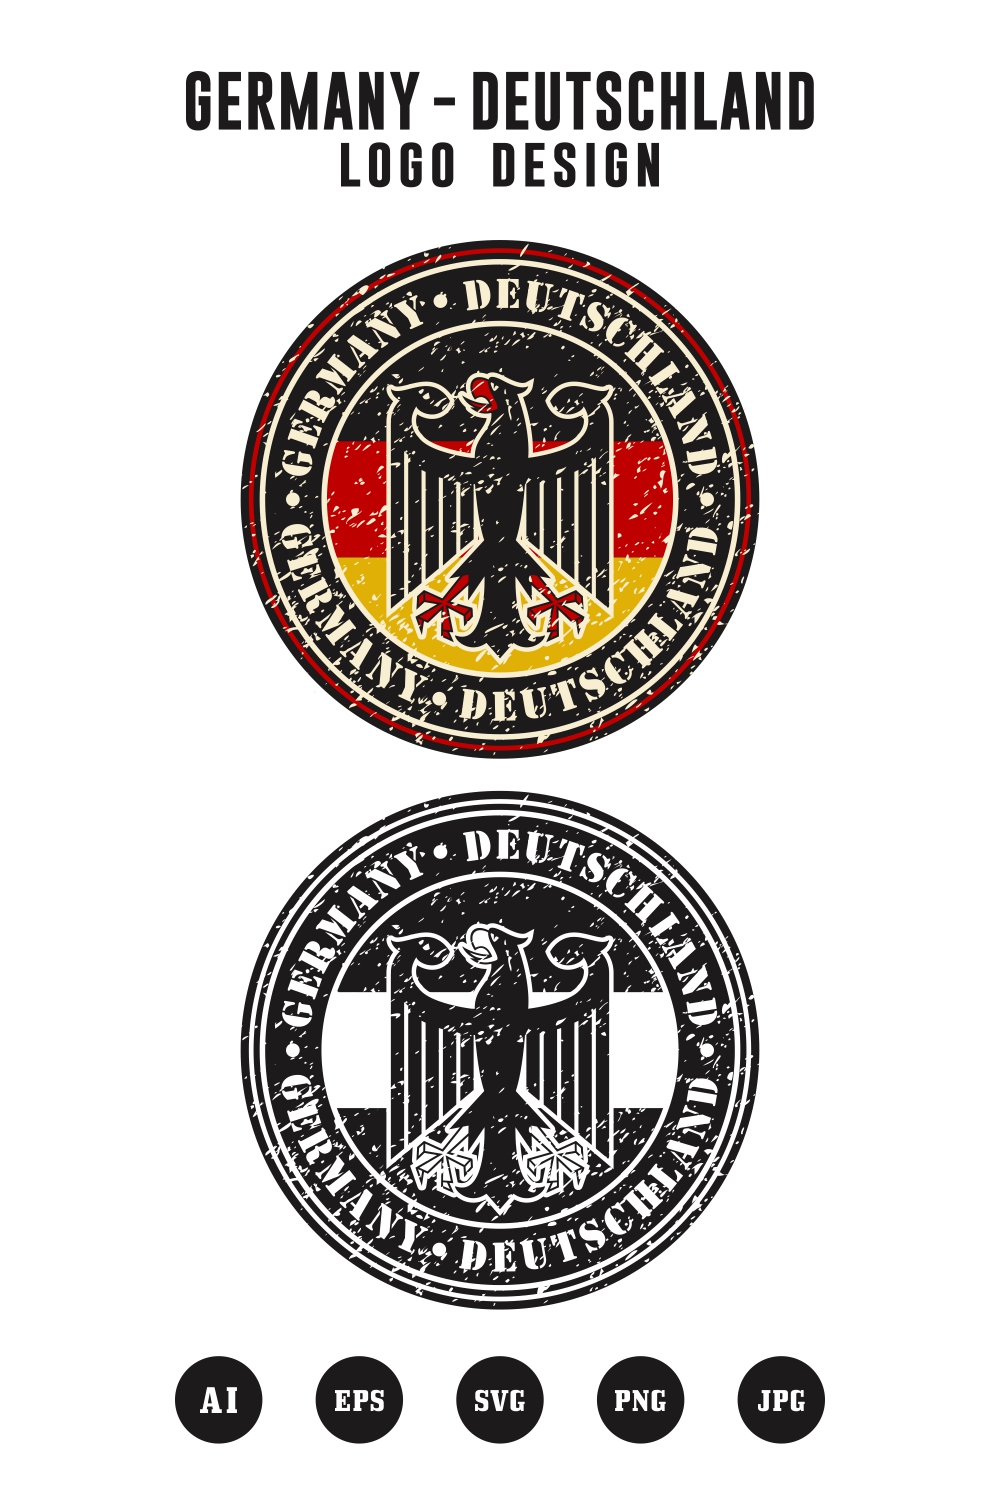 Germany deutshland logo design collection - $4 pinterest preview image.